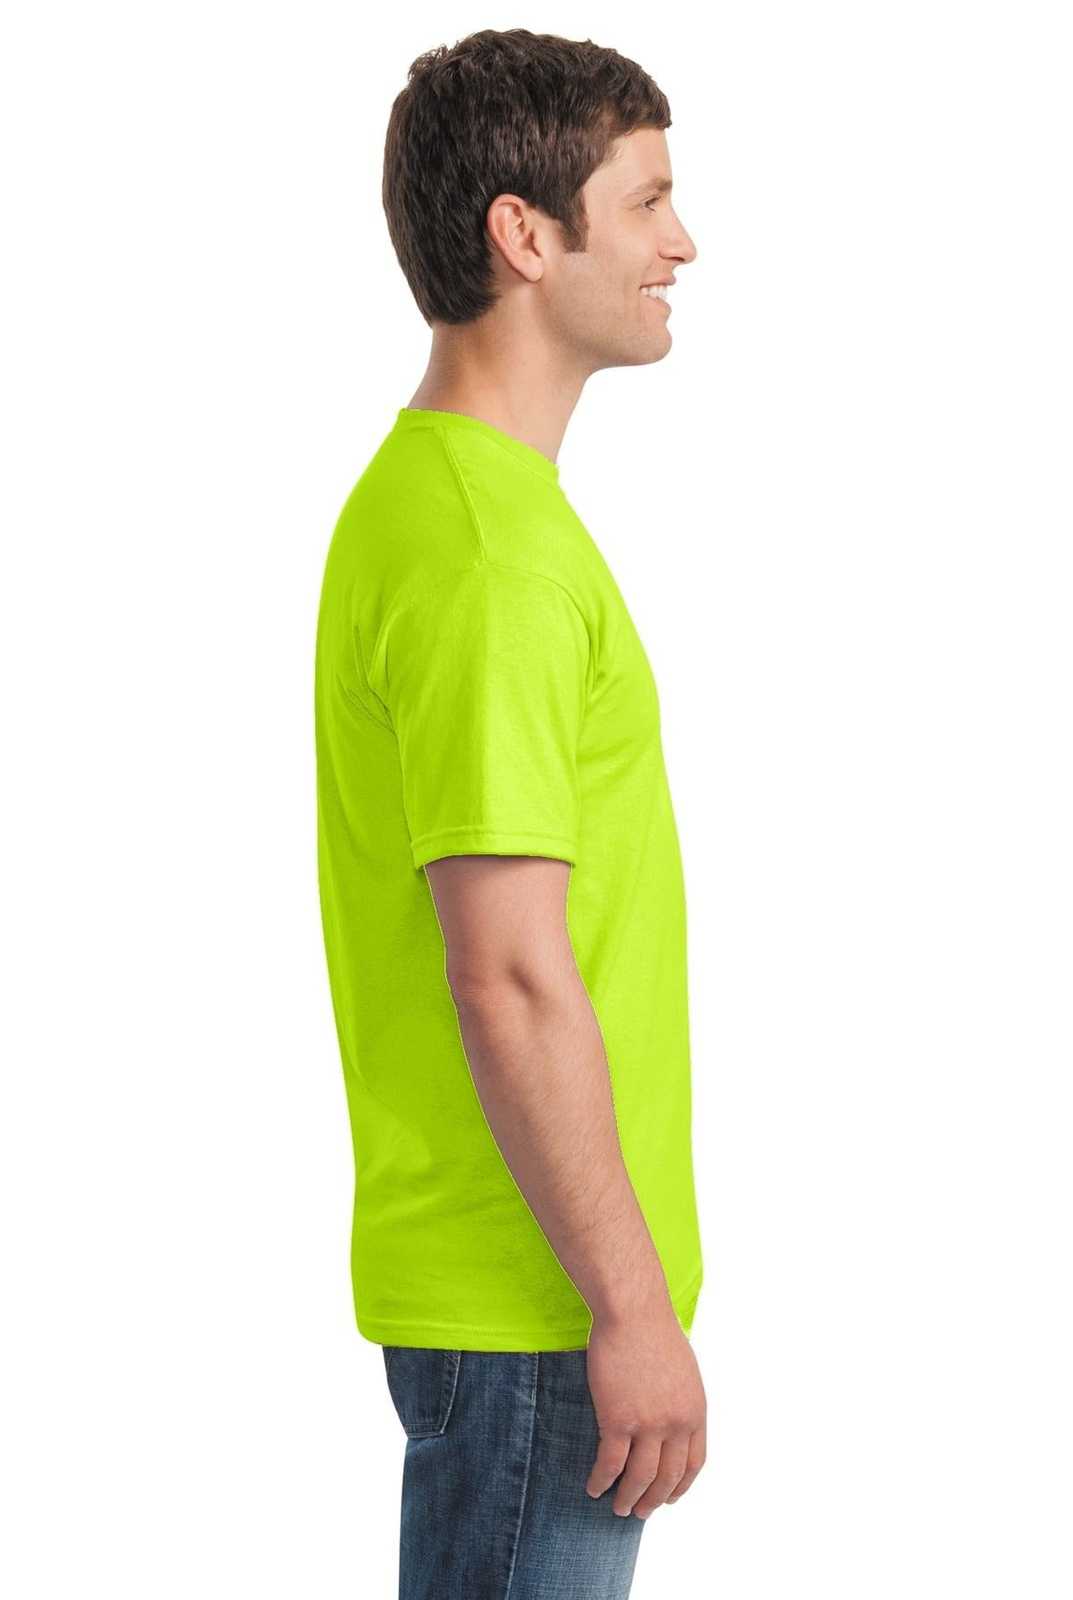 Gildan 5000 Heavy Cotton 100% Cotton T-Shirt - Safety Green - HIT a Double